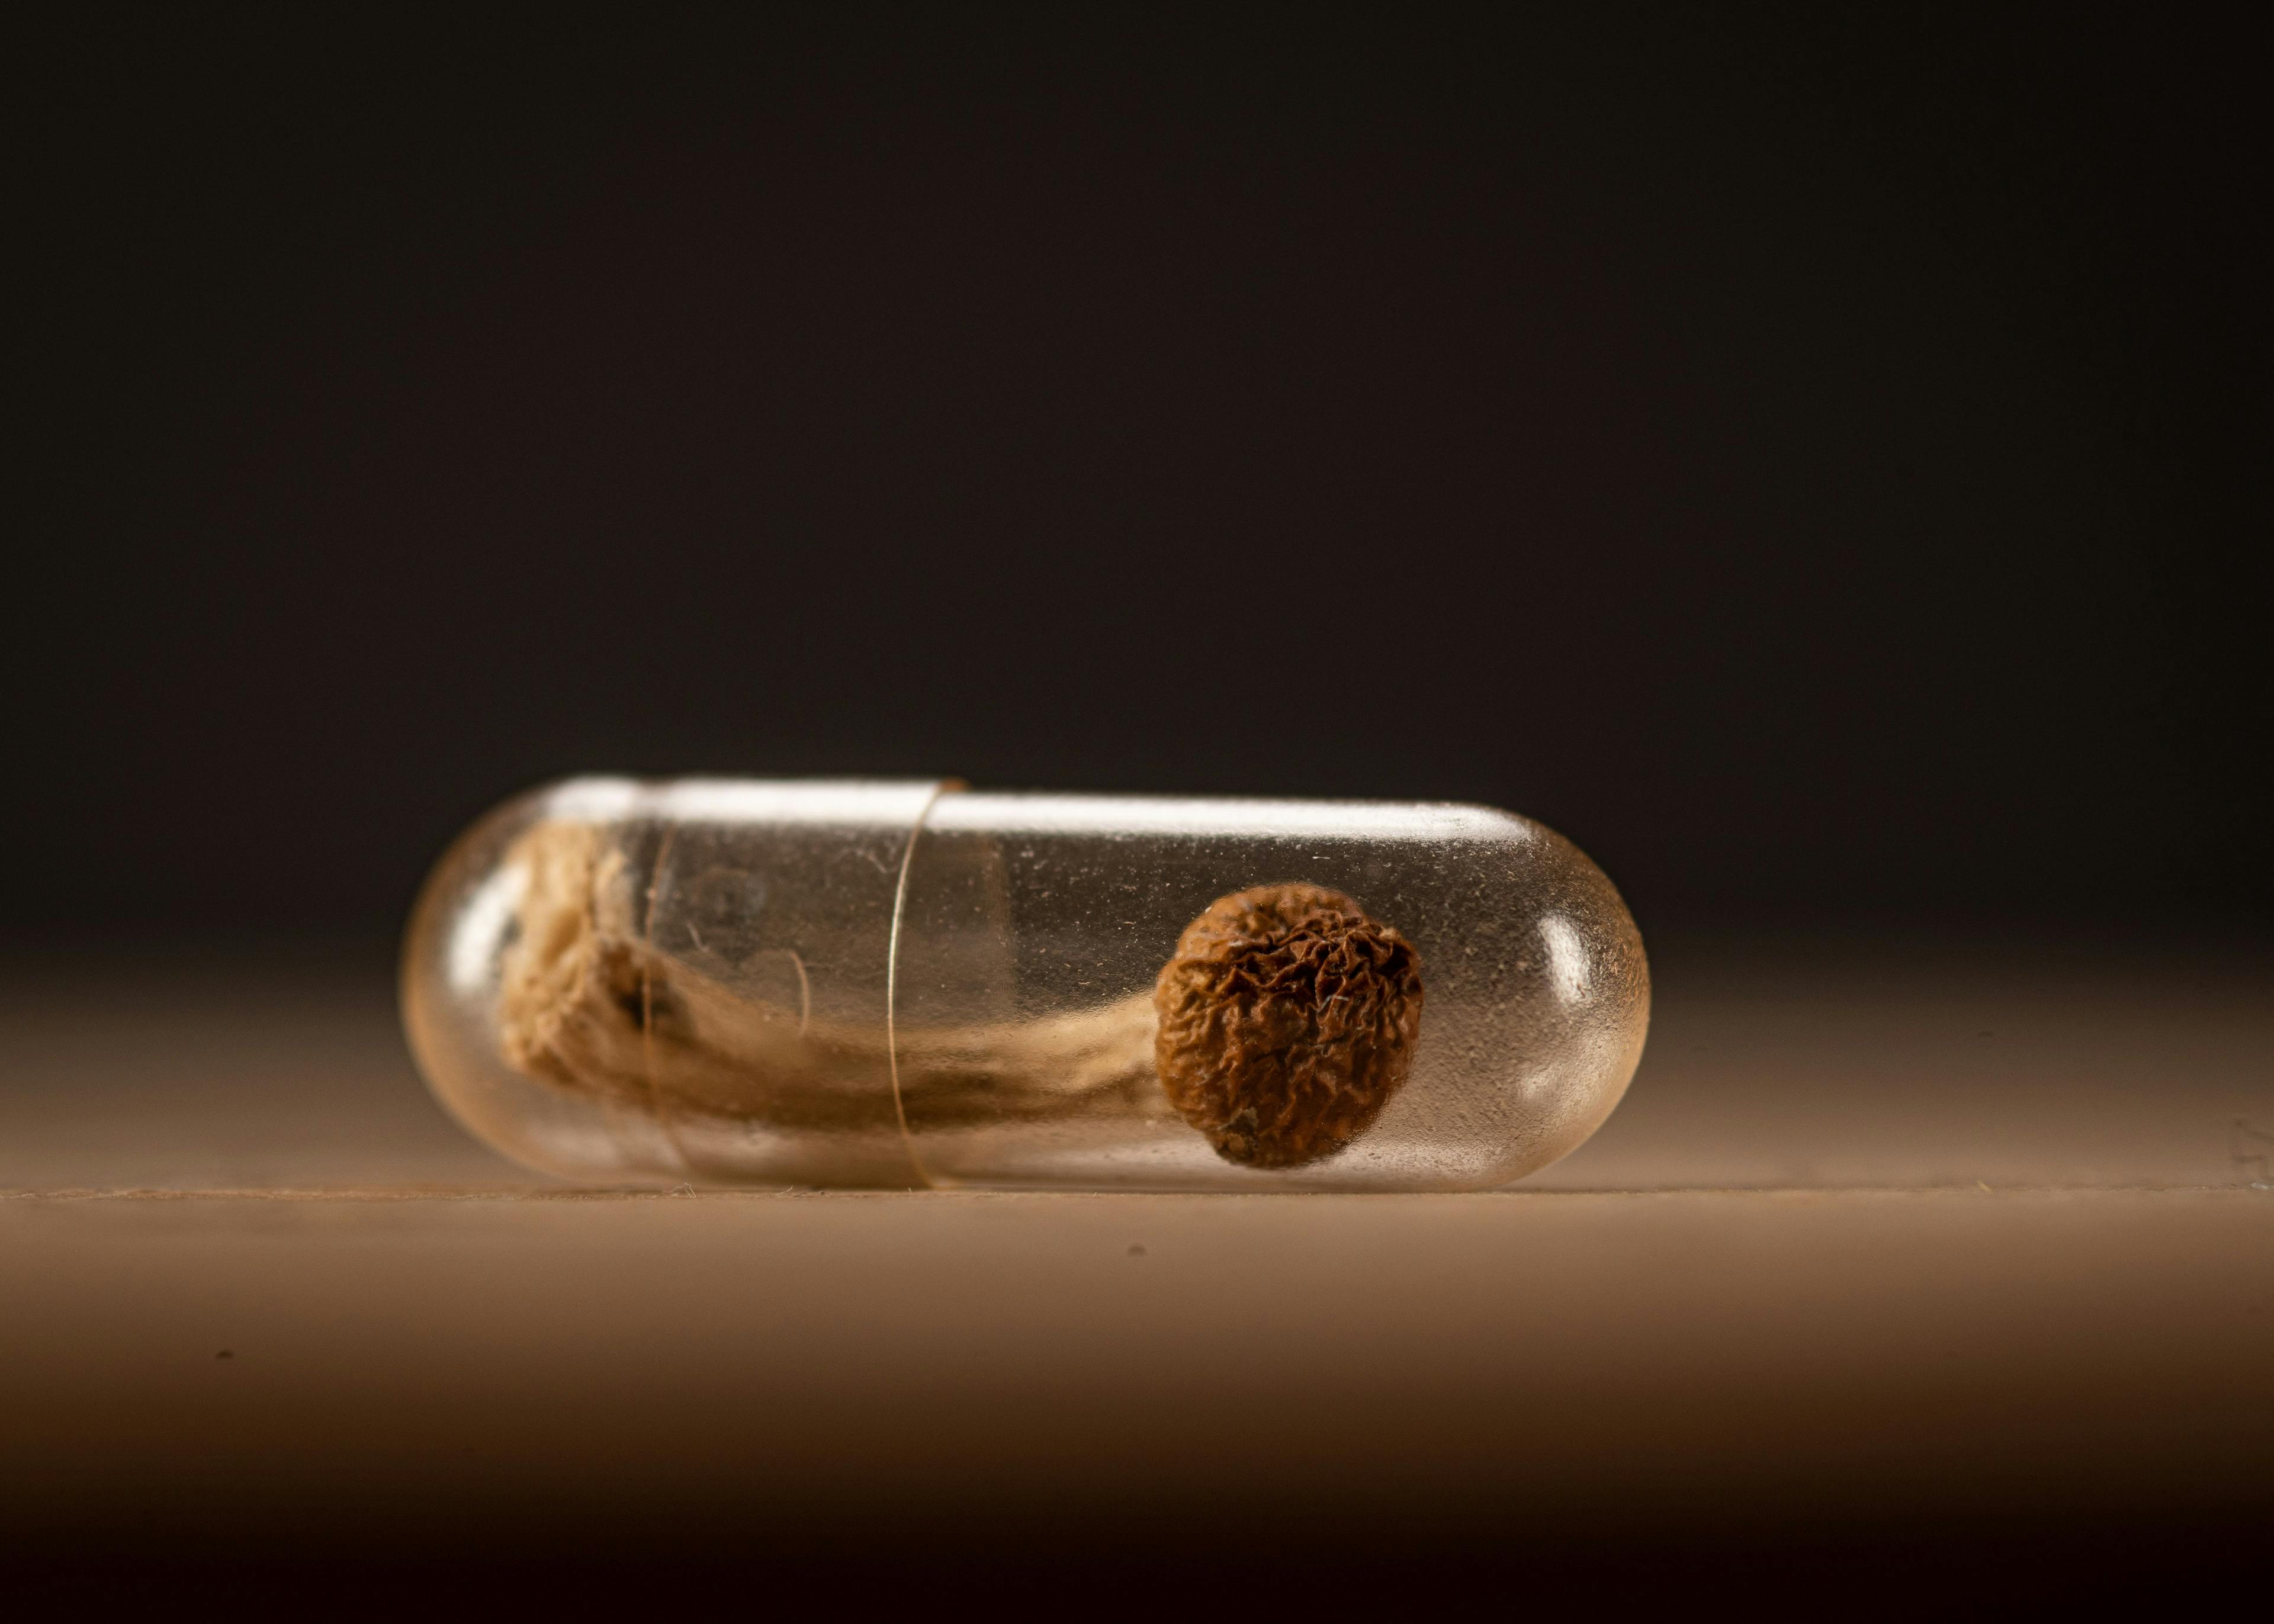 Whole psilocybin mushroom in a clear medication capsule | Image credit: Zim - stock.adobe.com